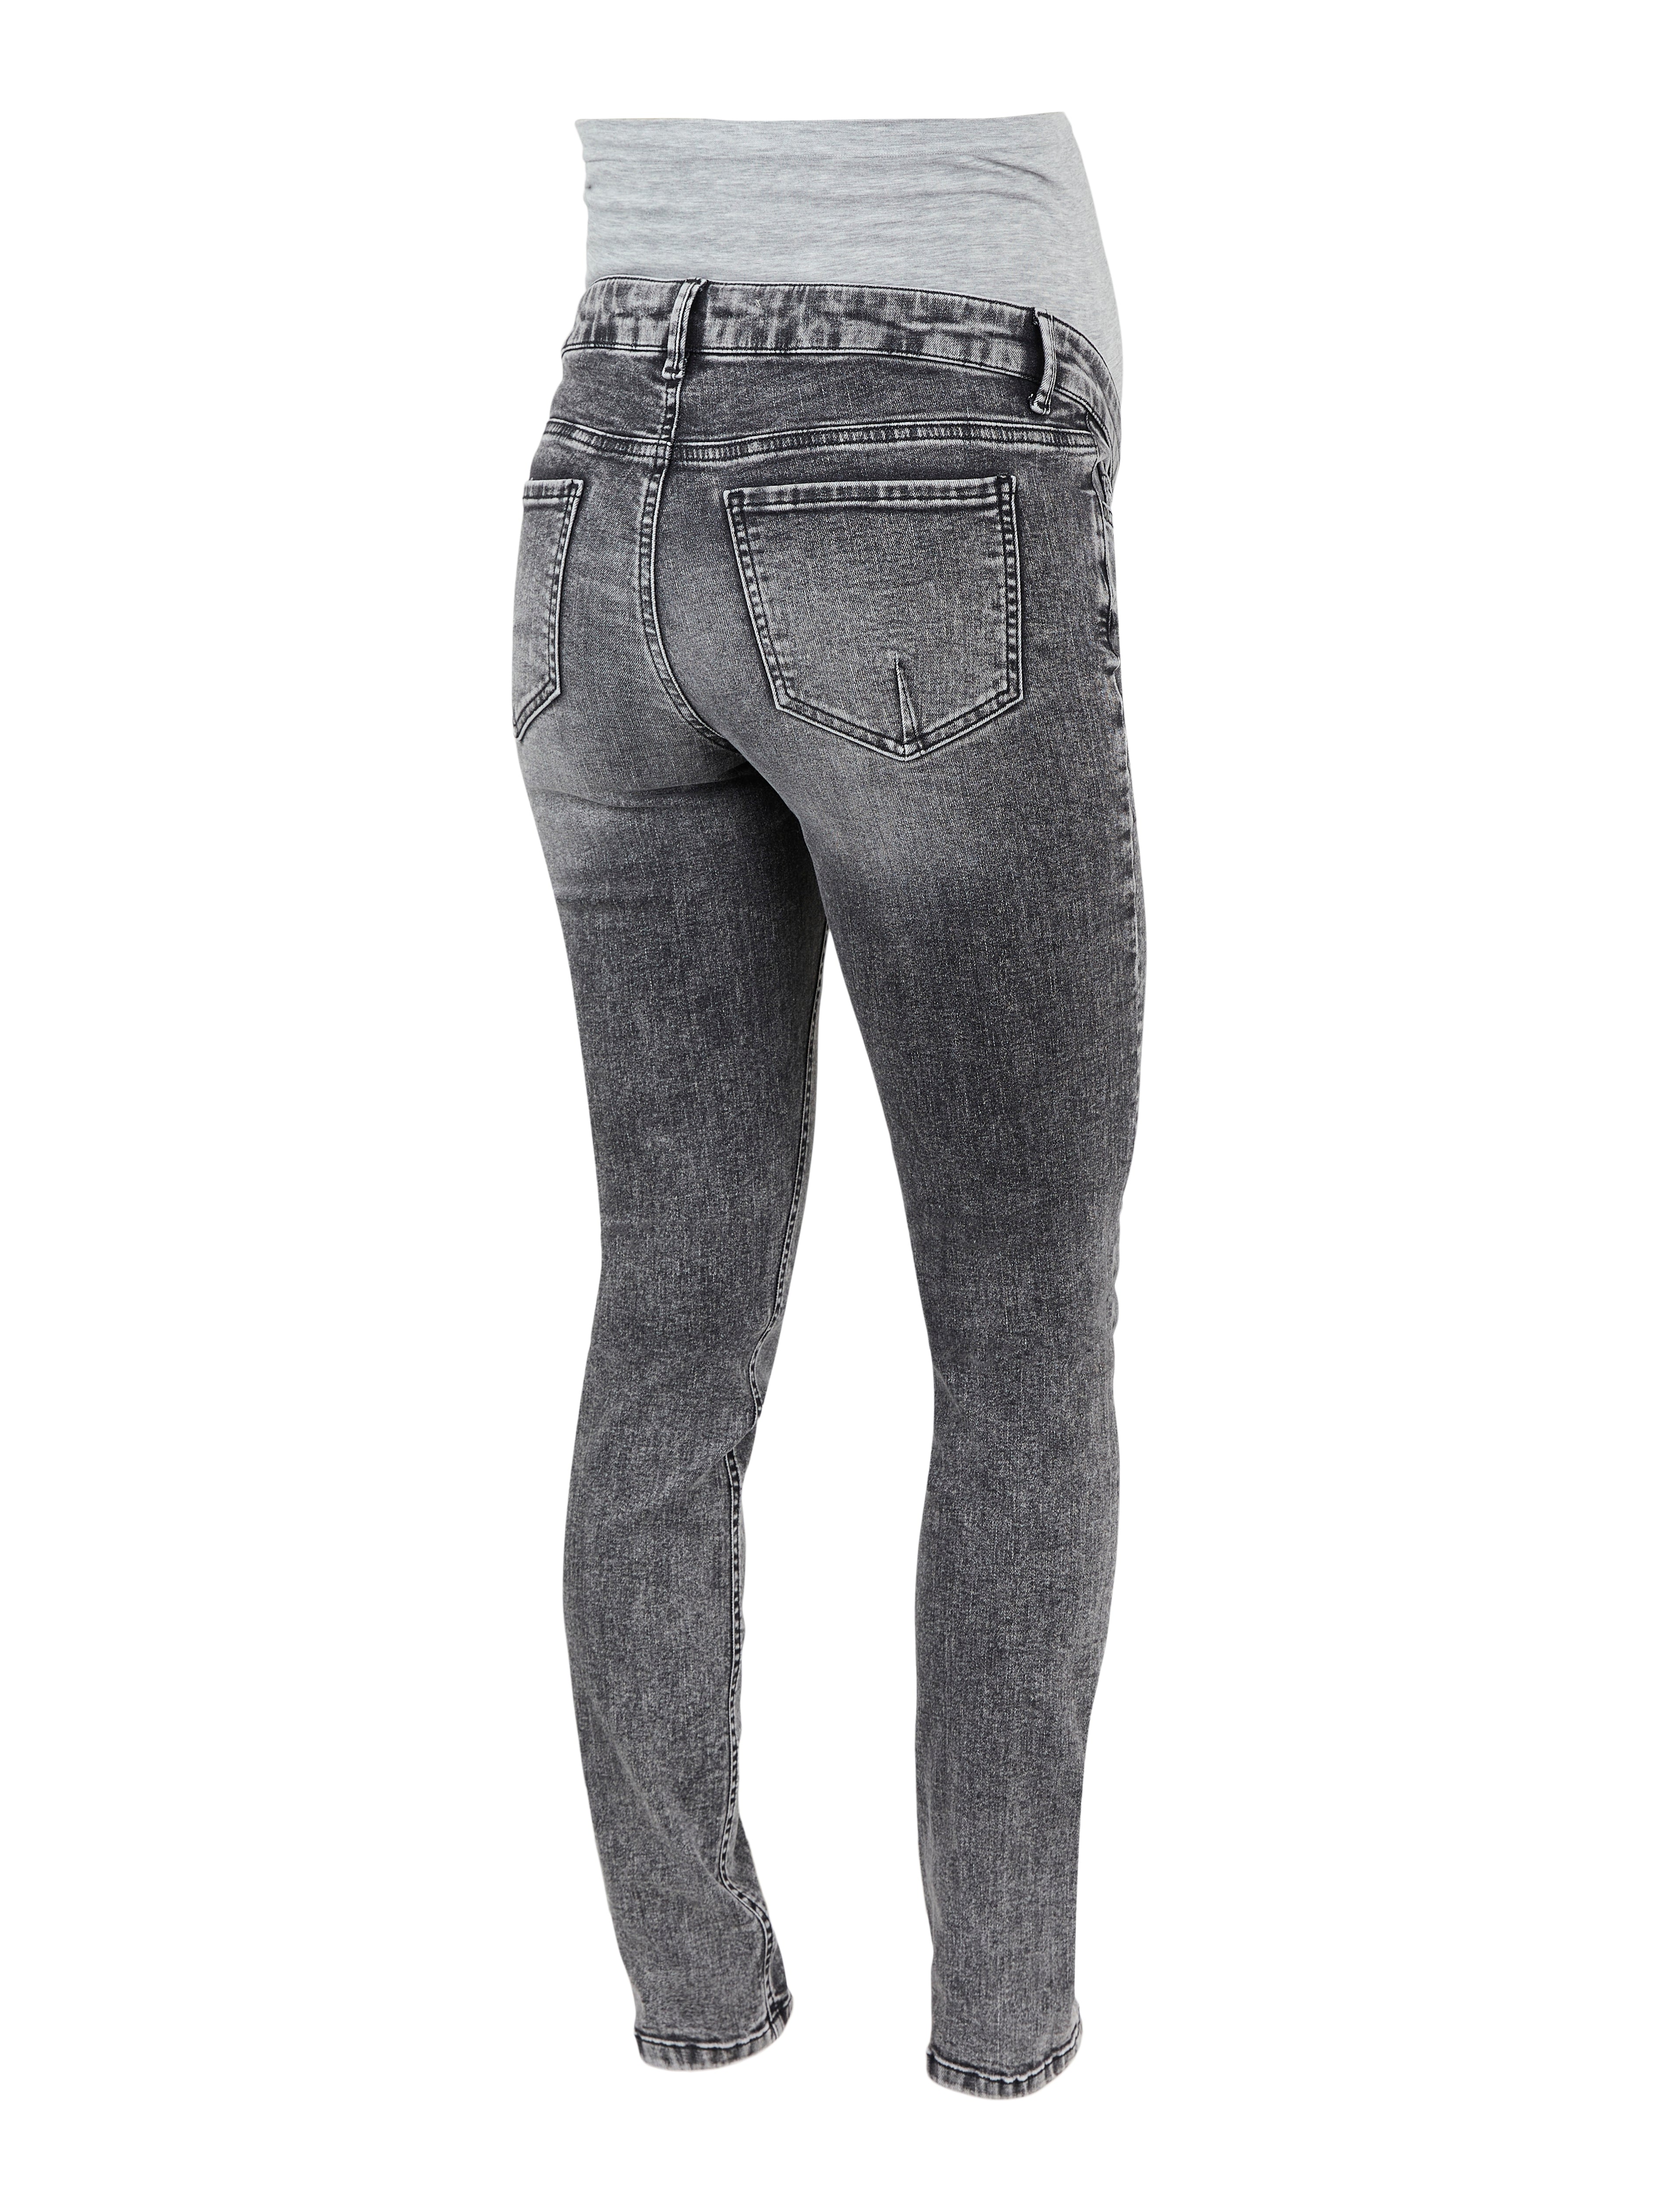 Utah Organic Slim Jeans - Black Washed